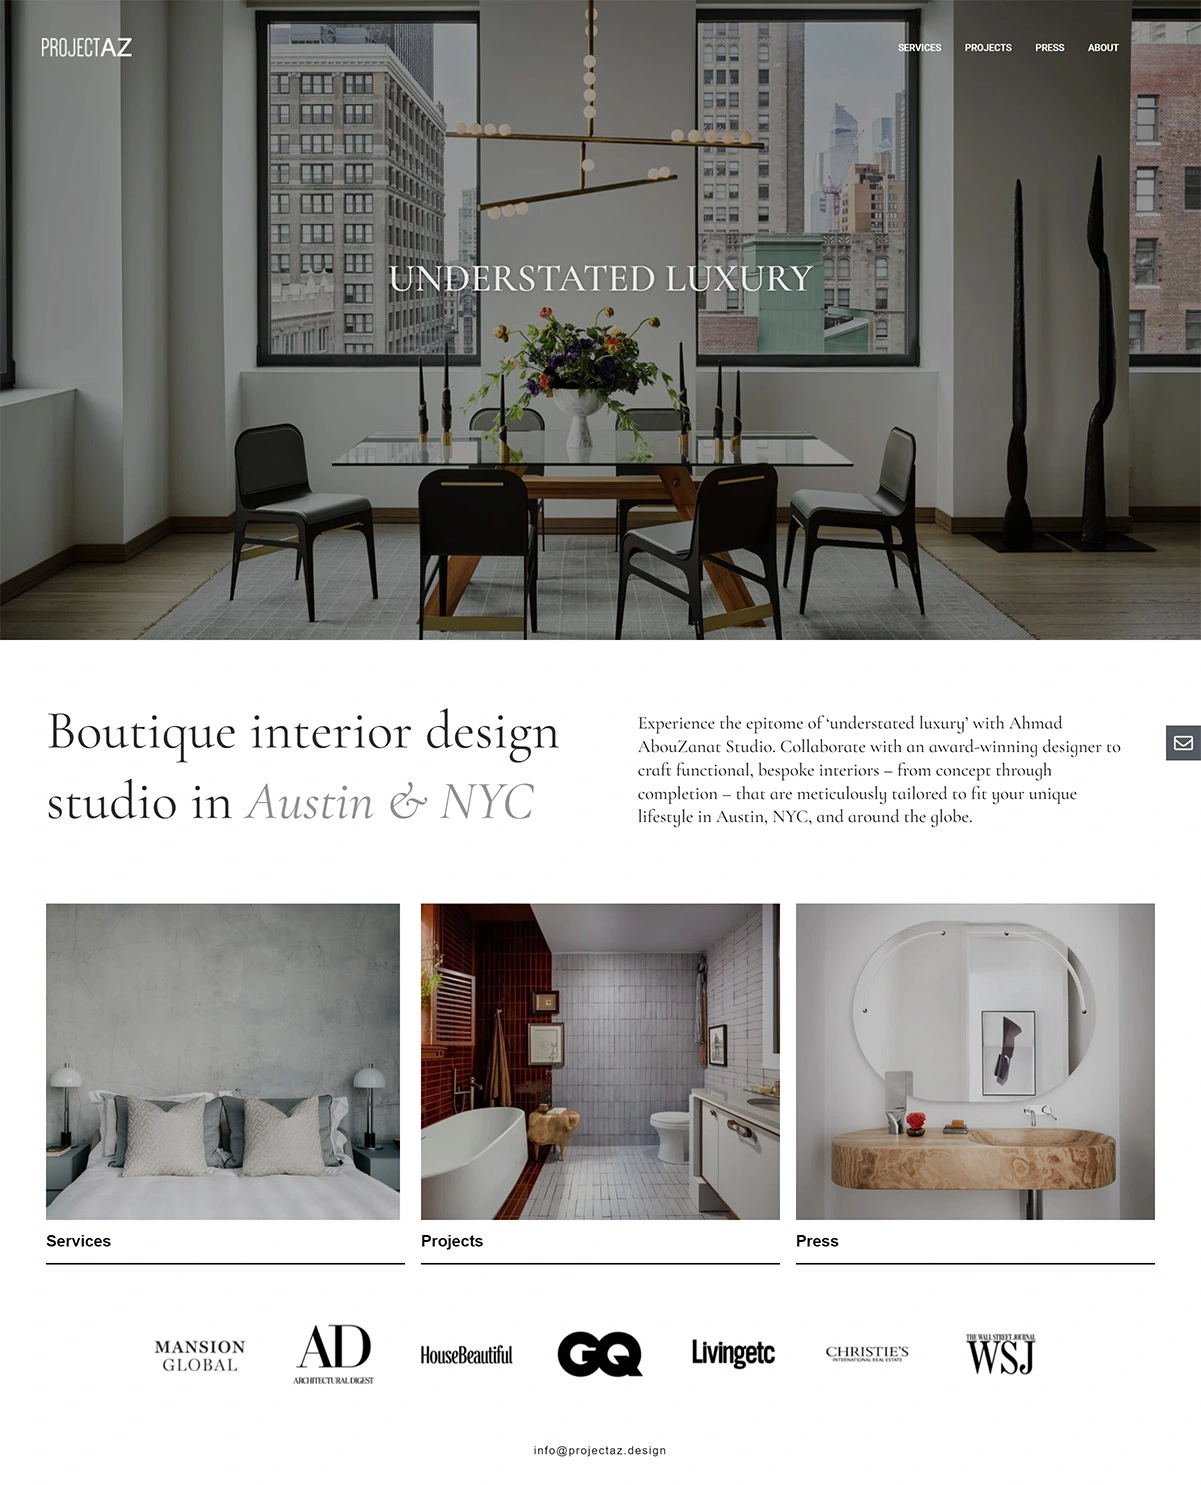 projectaz.design interior designer website - Ahmad AbouZanat Studio in Austin, TX